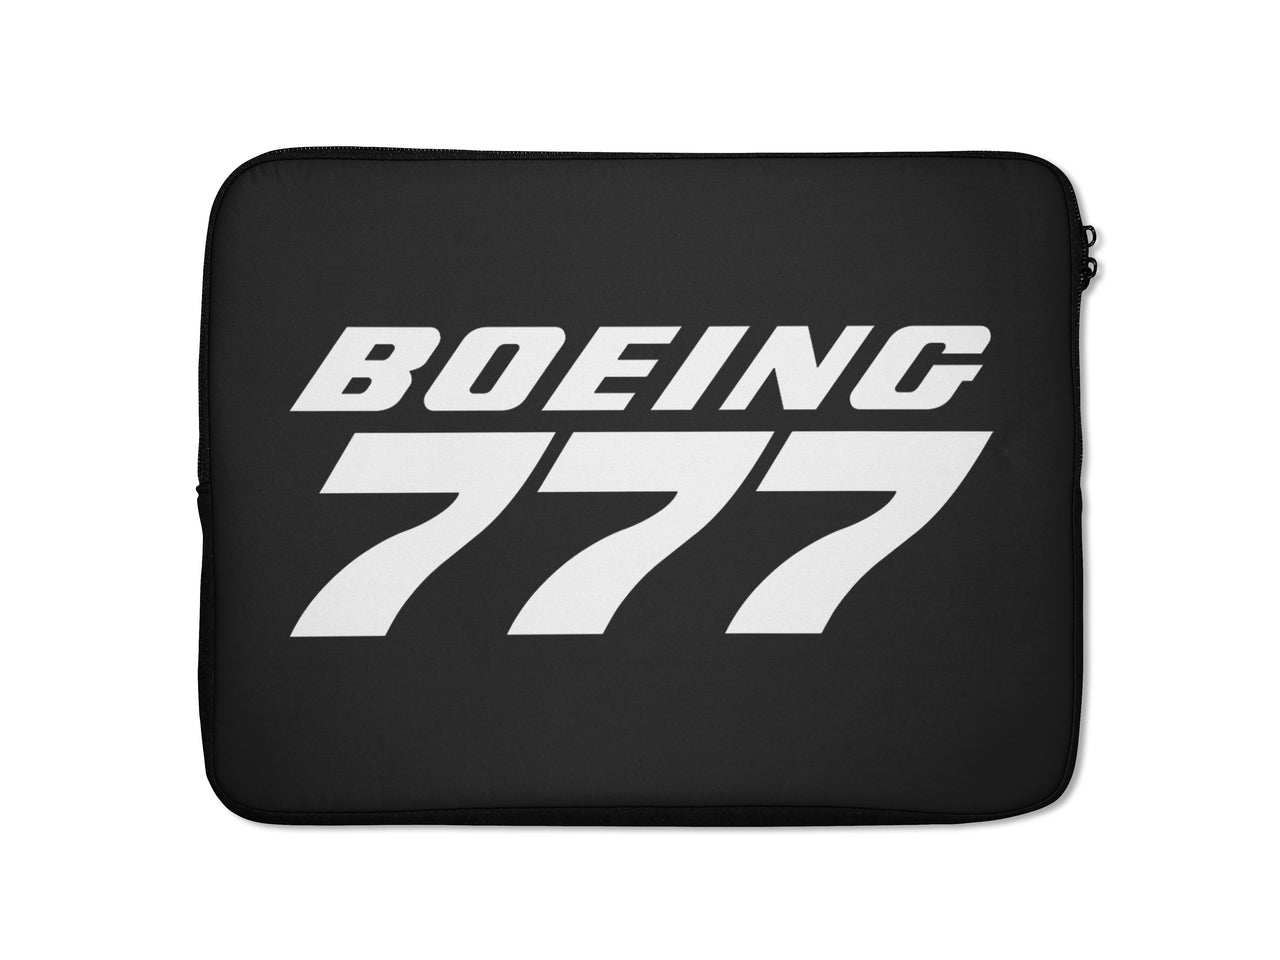 Boeing 777 & Text Designed Laptop & Tablet Cases